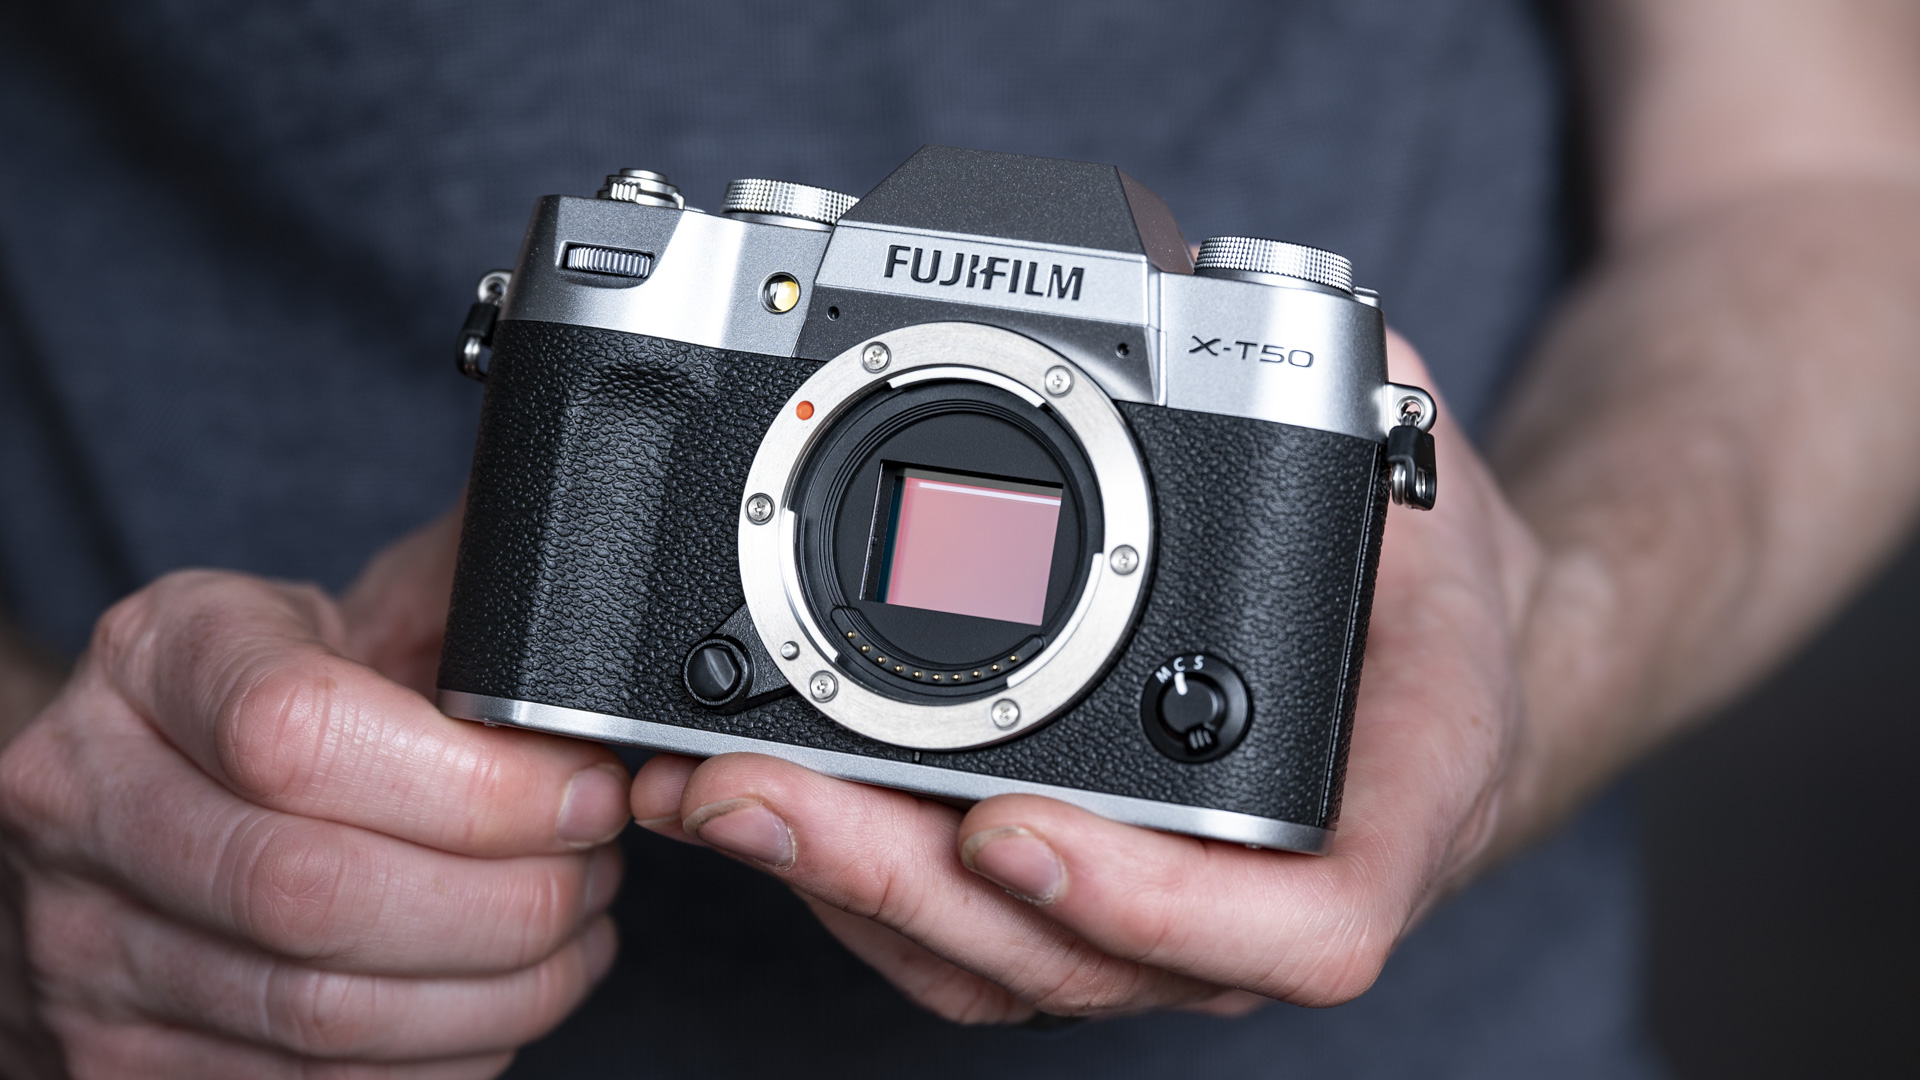 Sensor of the Fujifilm X-T50 camera